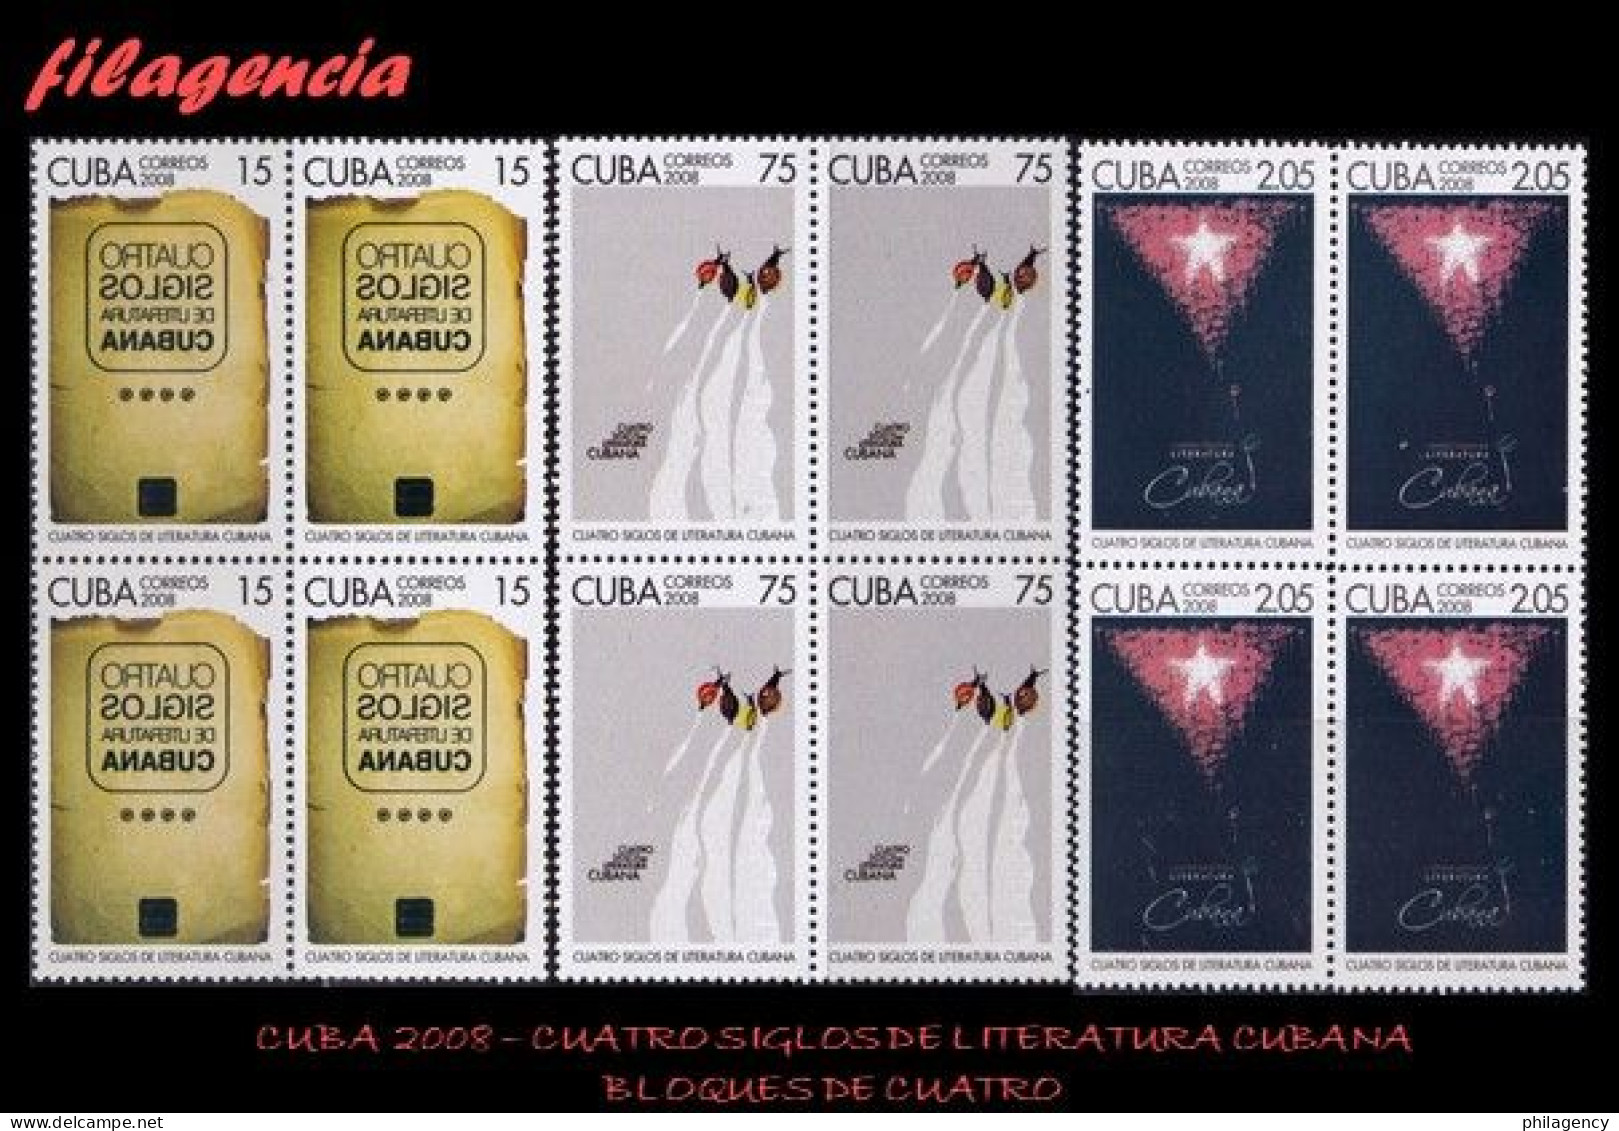 CUBA. BLOQUES DE CUATRO. 2008-28 CUATRO SIGLOS DE LITERATURA CUBANA - Nuovi